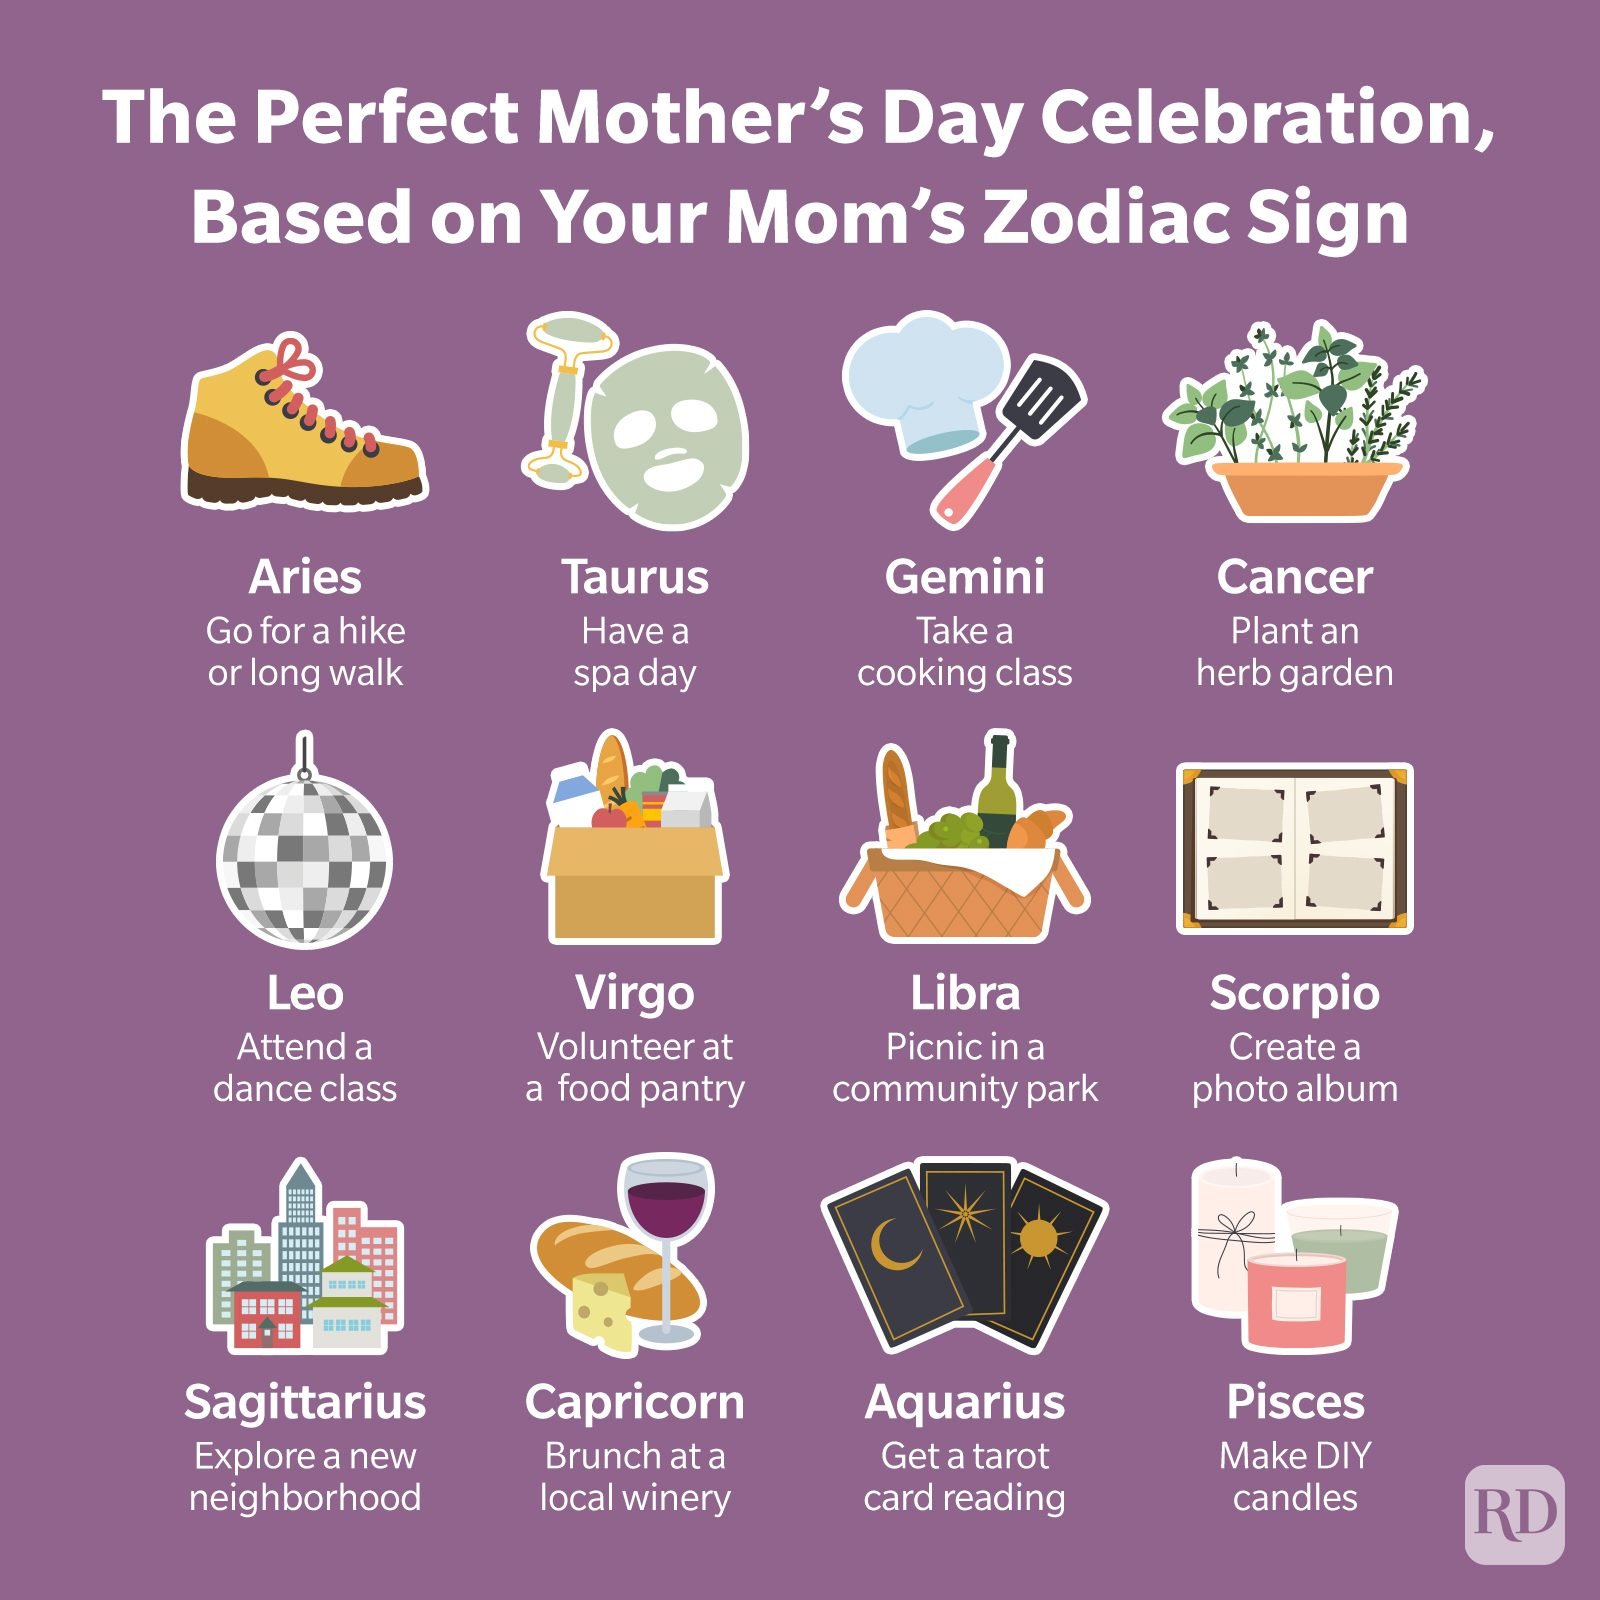 https://www.rd.com/wp-content/uploads/2022/03/RD-Mothers-Day-Celebration-Zodiac.jpg